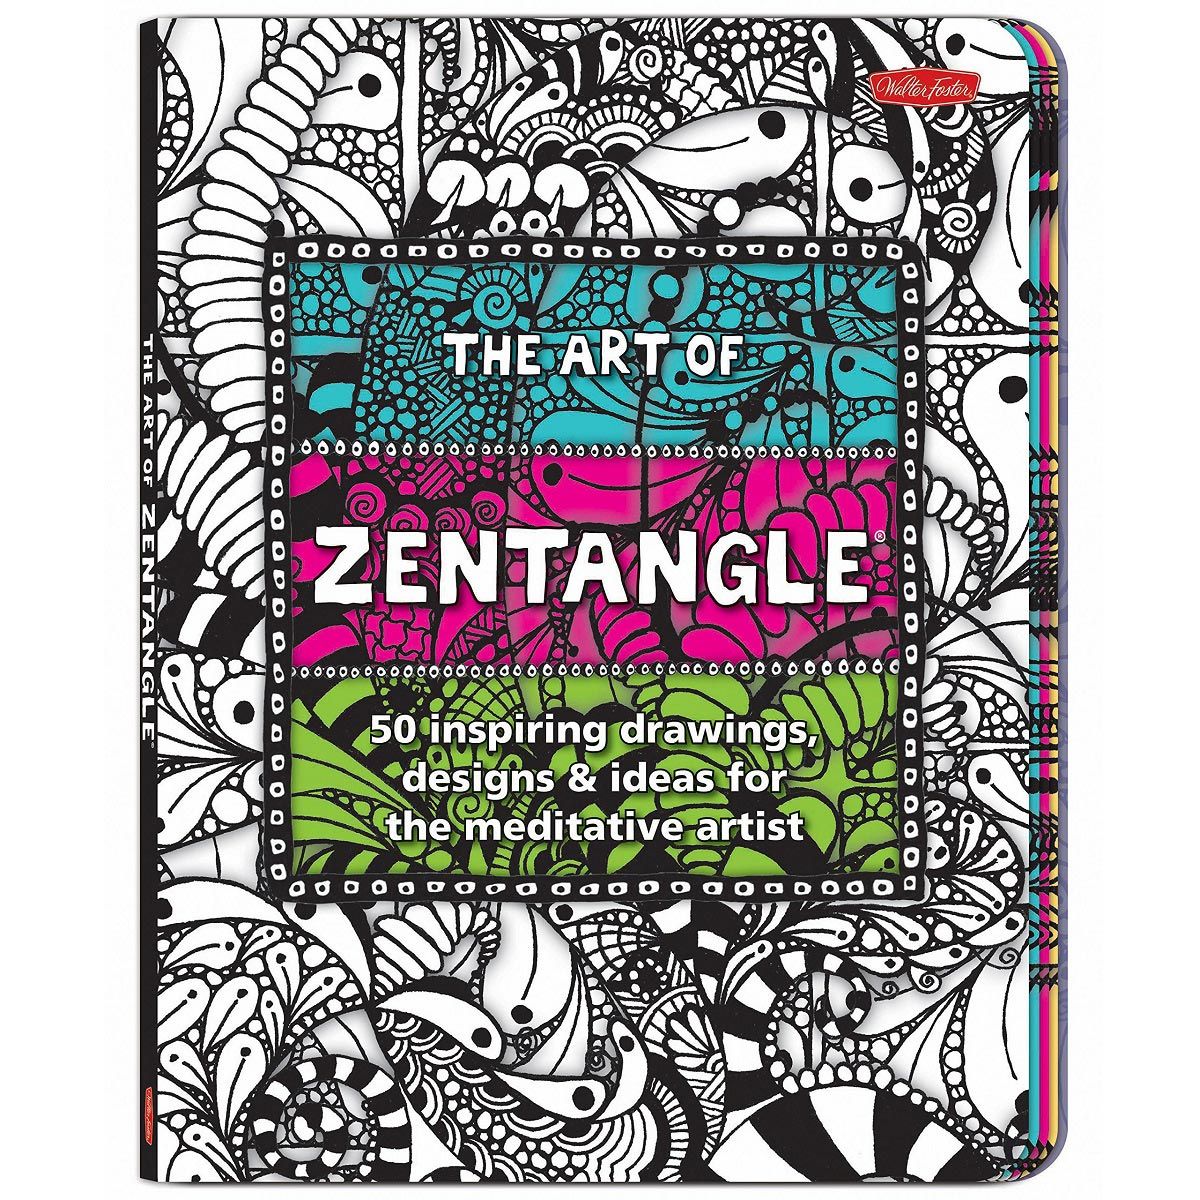 The Art Of Zentangle: 50 Inspiring Drawings, Designs & Ideas For The Meditative Artist